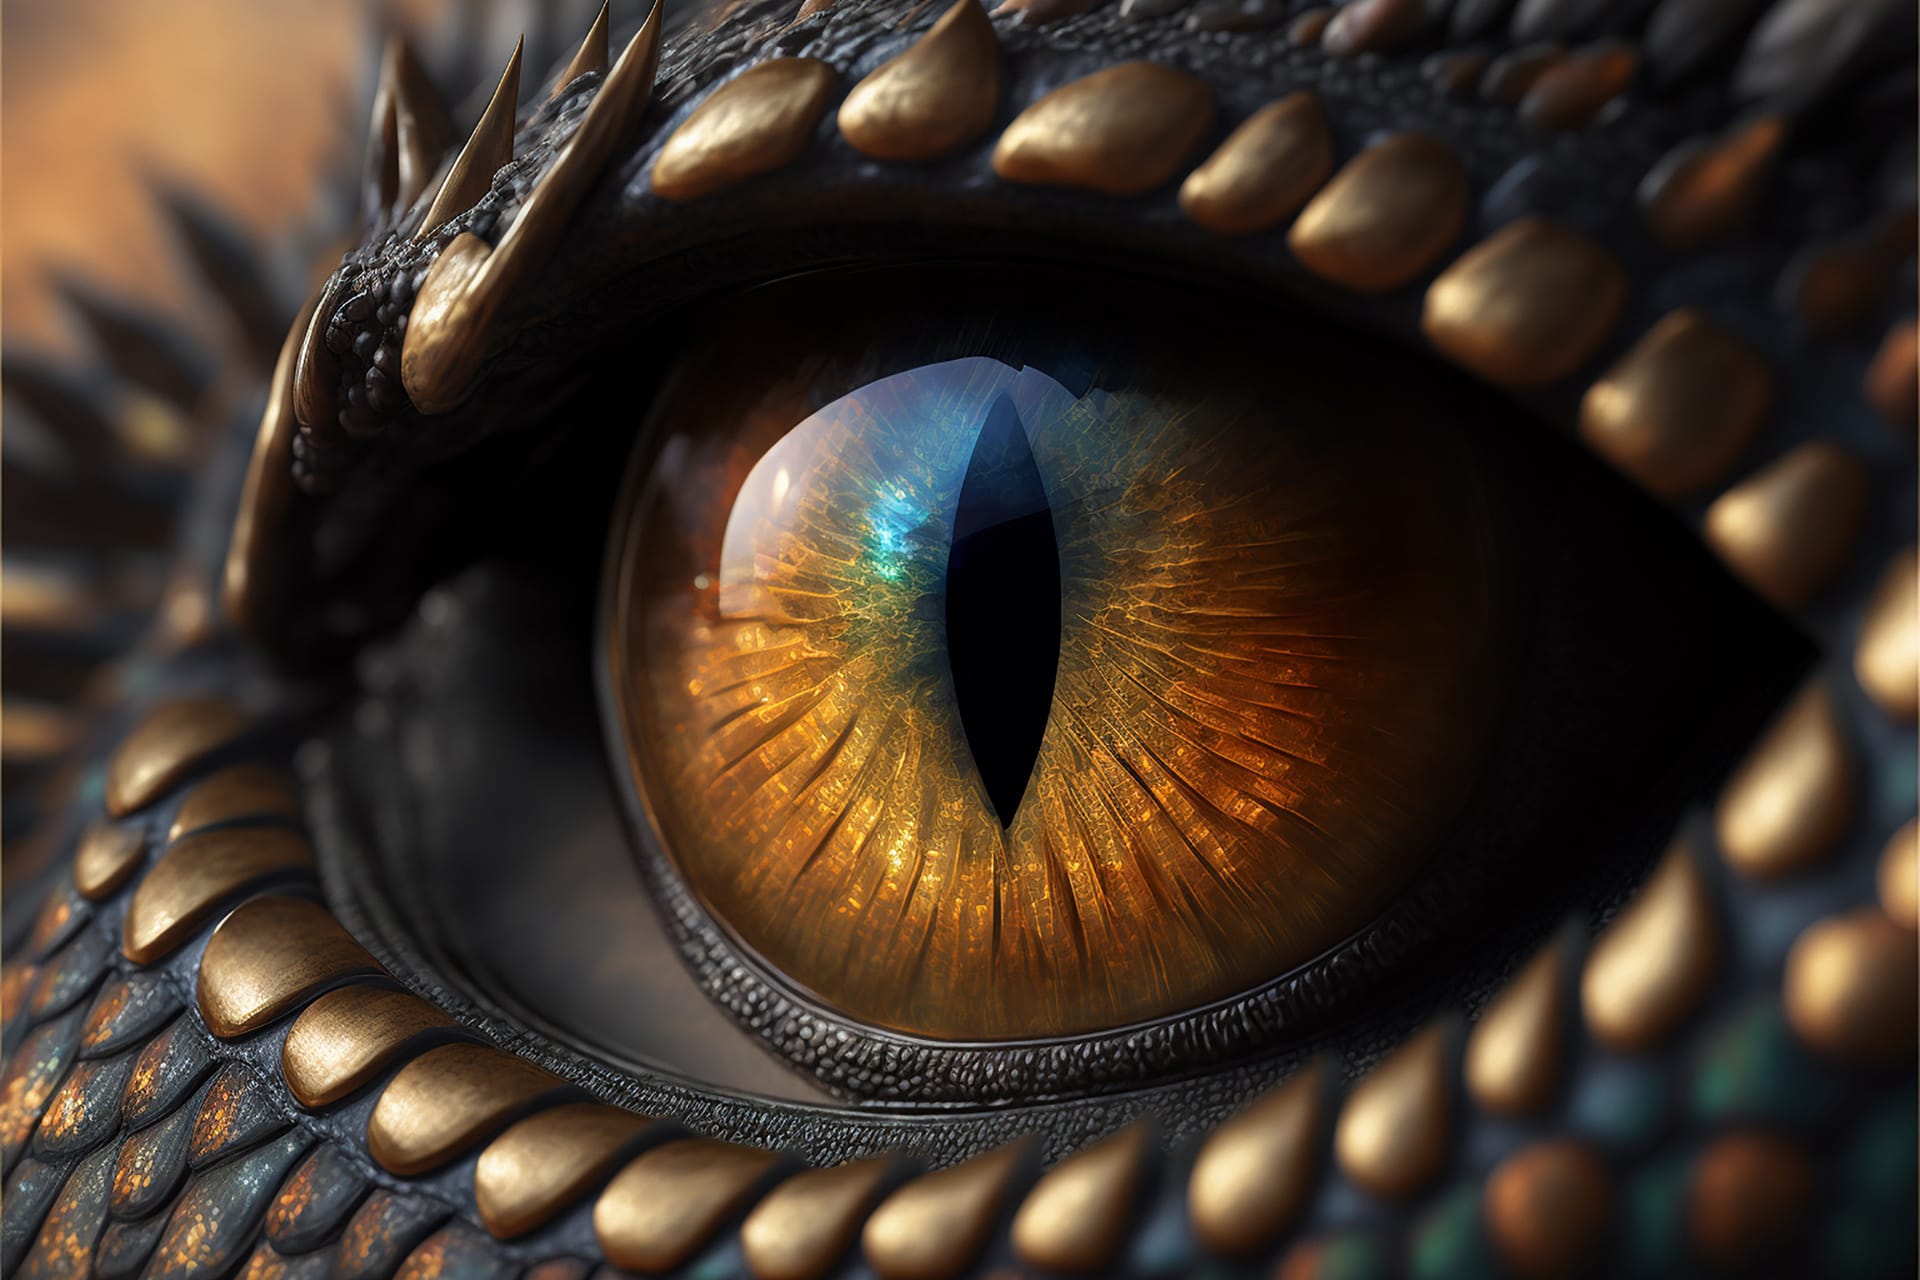 Dragon eye no blur high detail realism 3d render picture